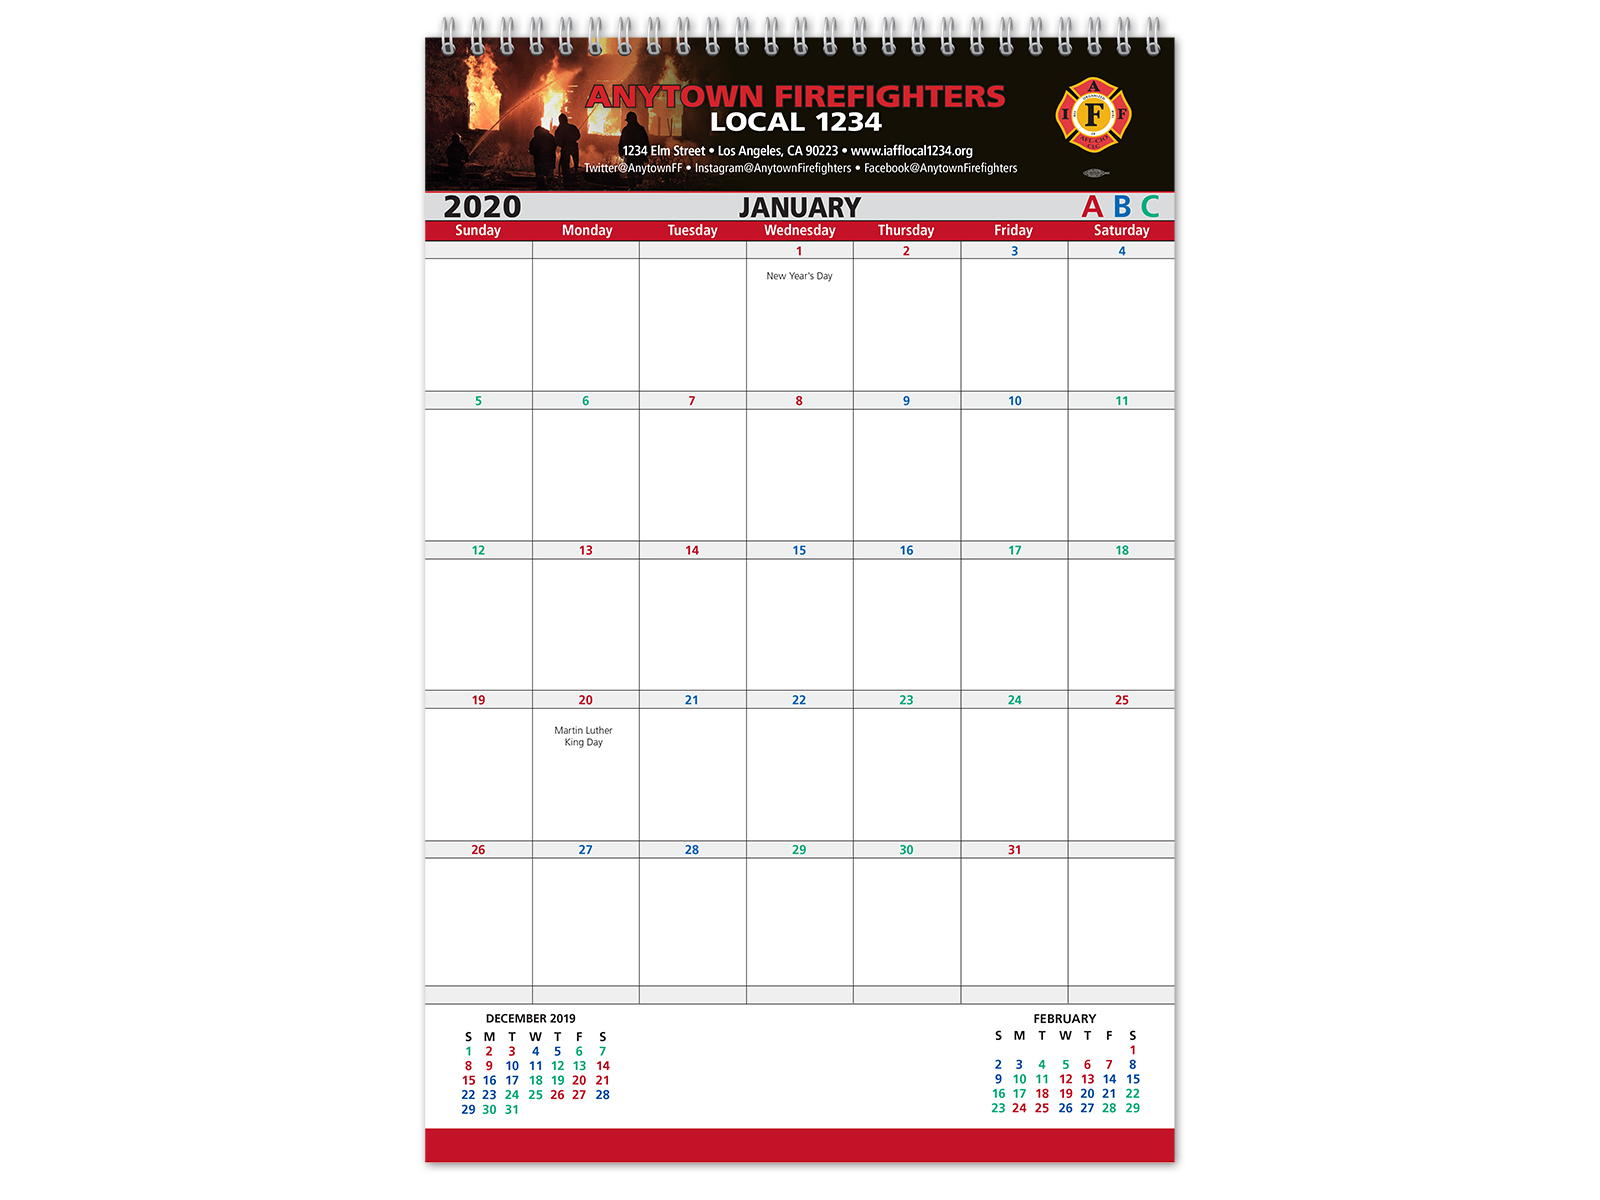 shift-calendars-firefighters-print-design